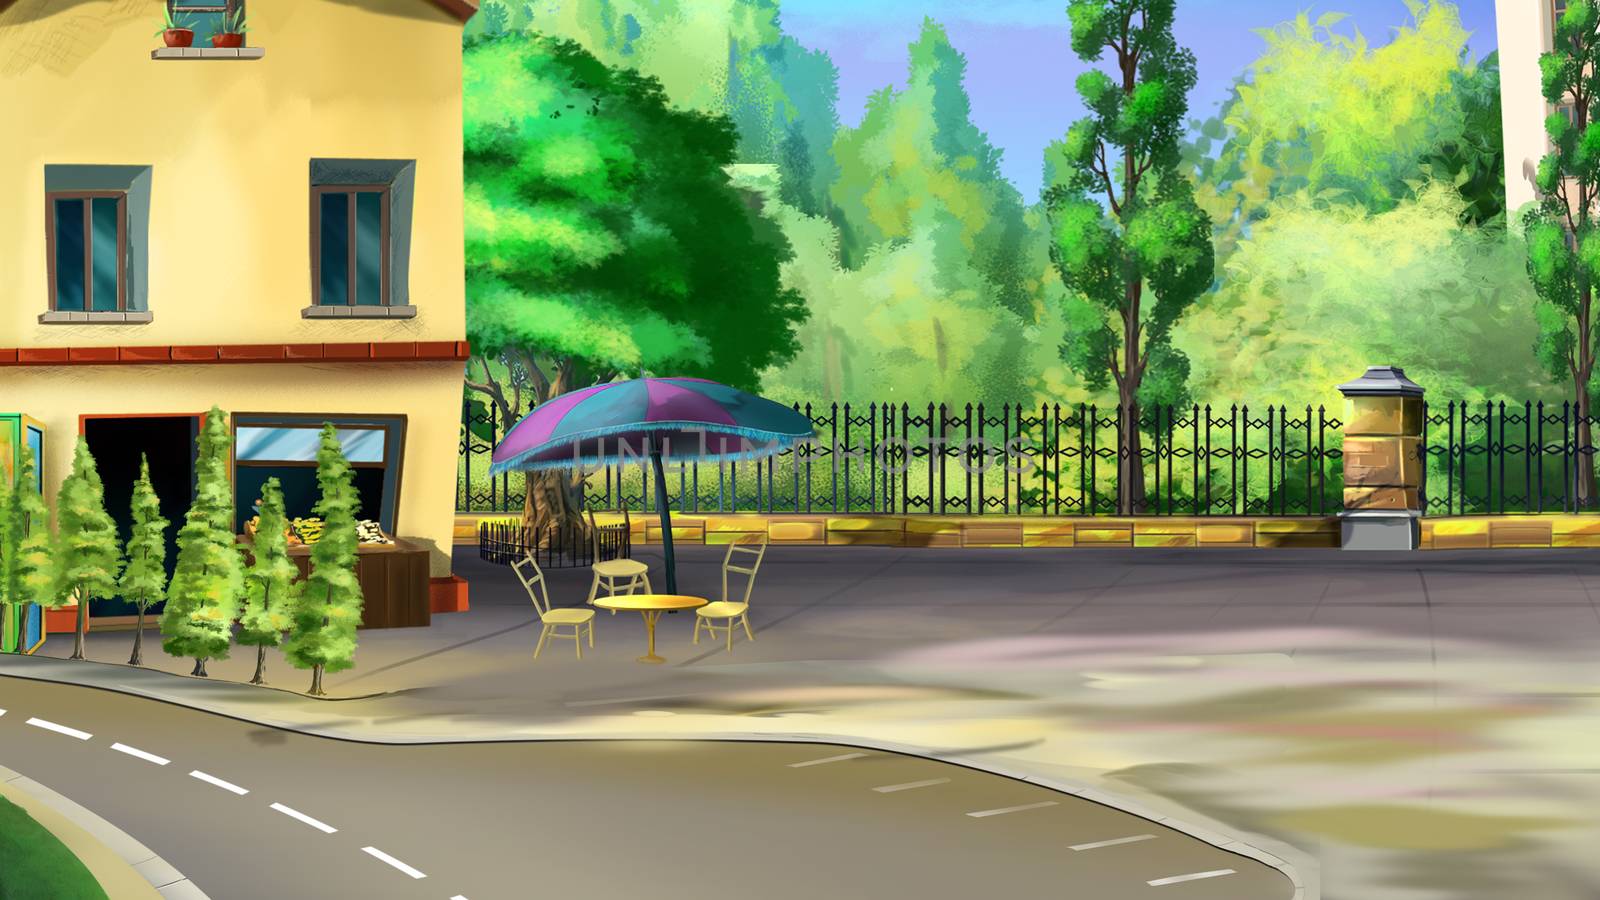 Roadside Cafe by Multipedia